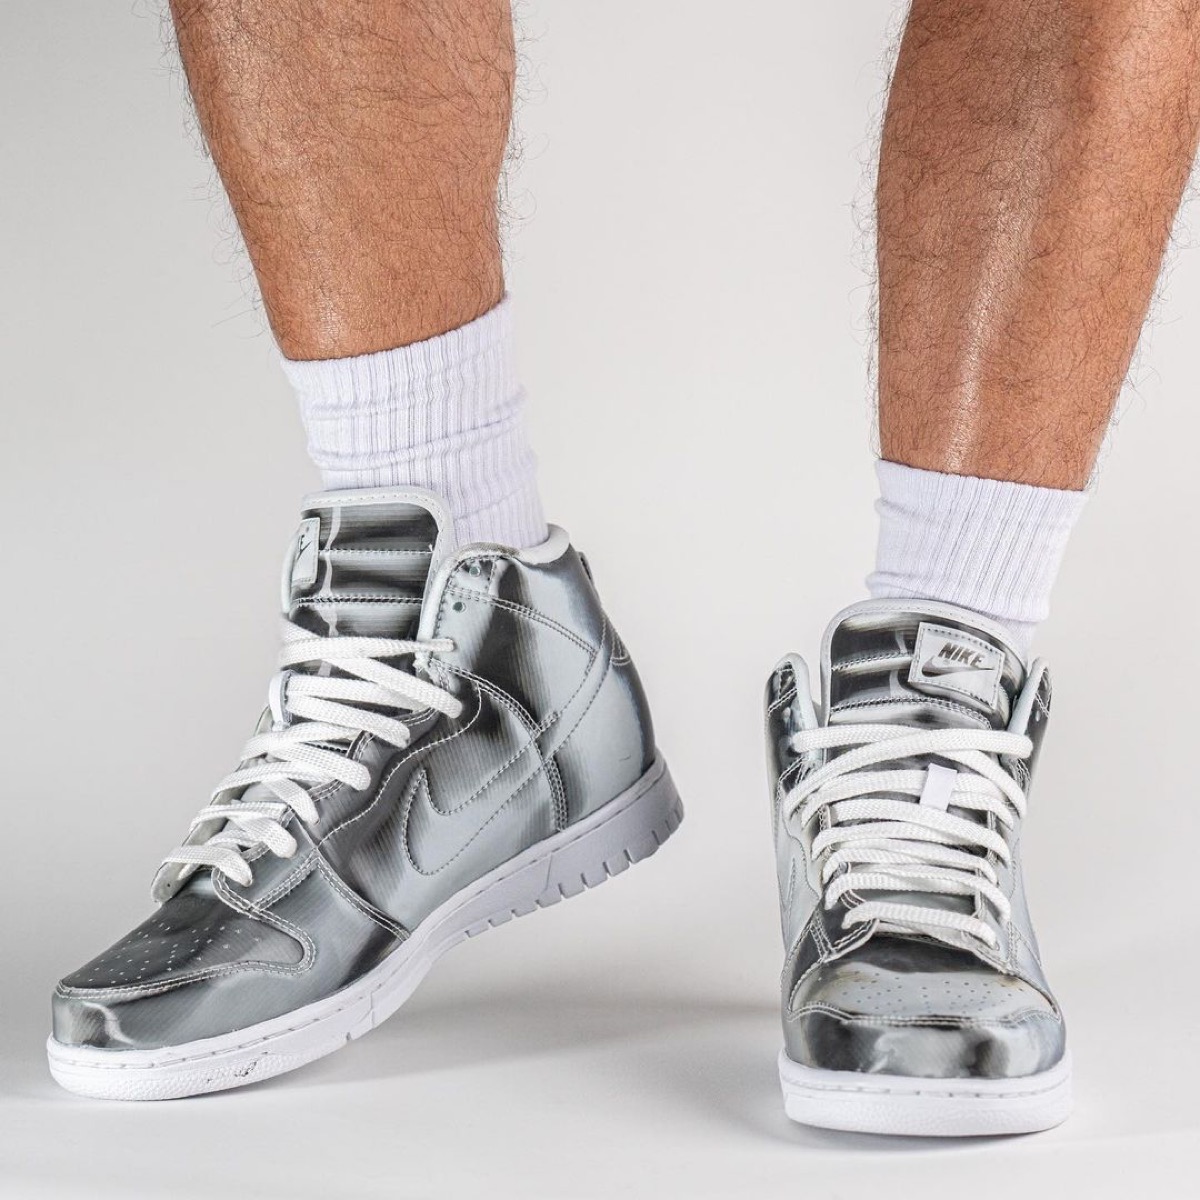 Metallic clot x Nike Dunk High “silver metallic” dunk collection插图2